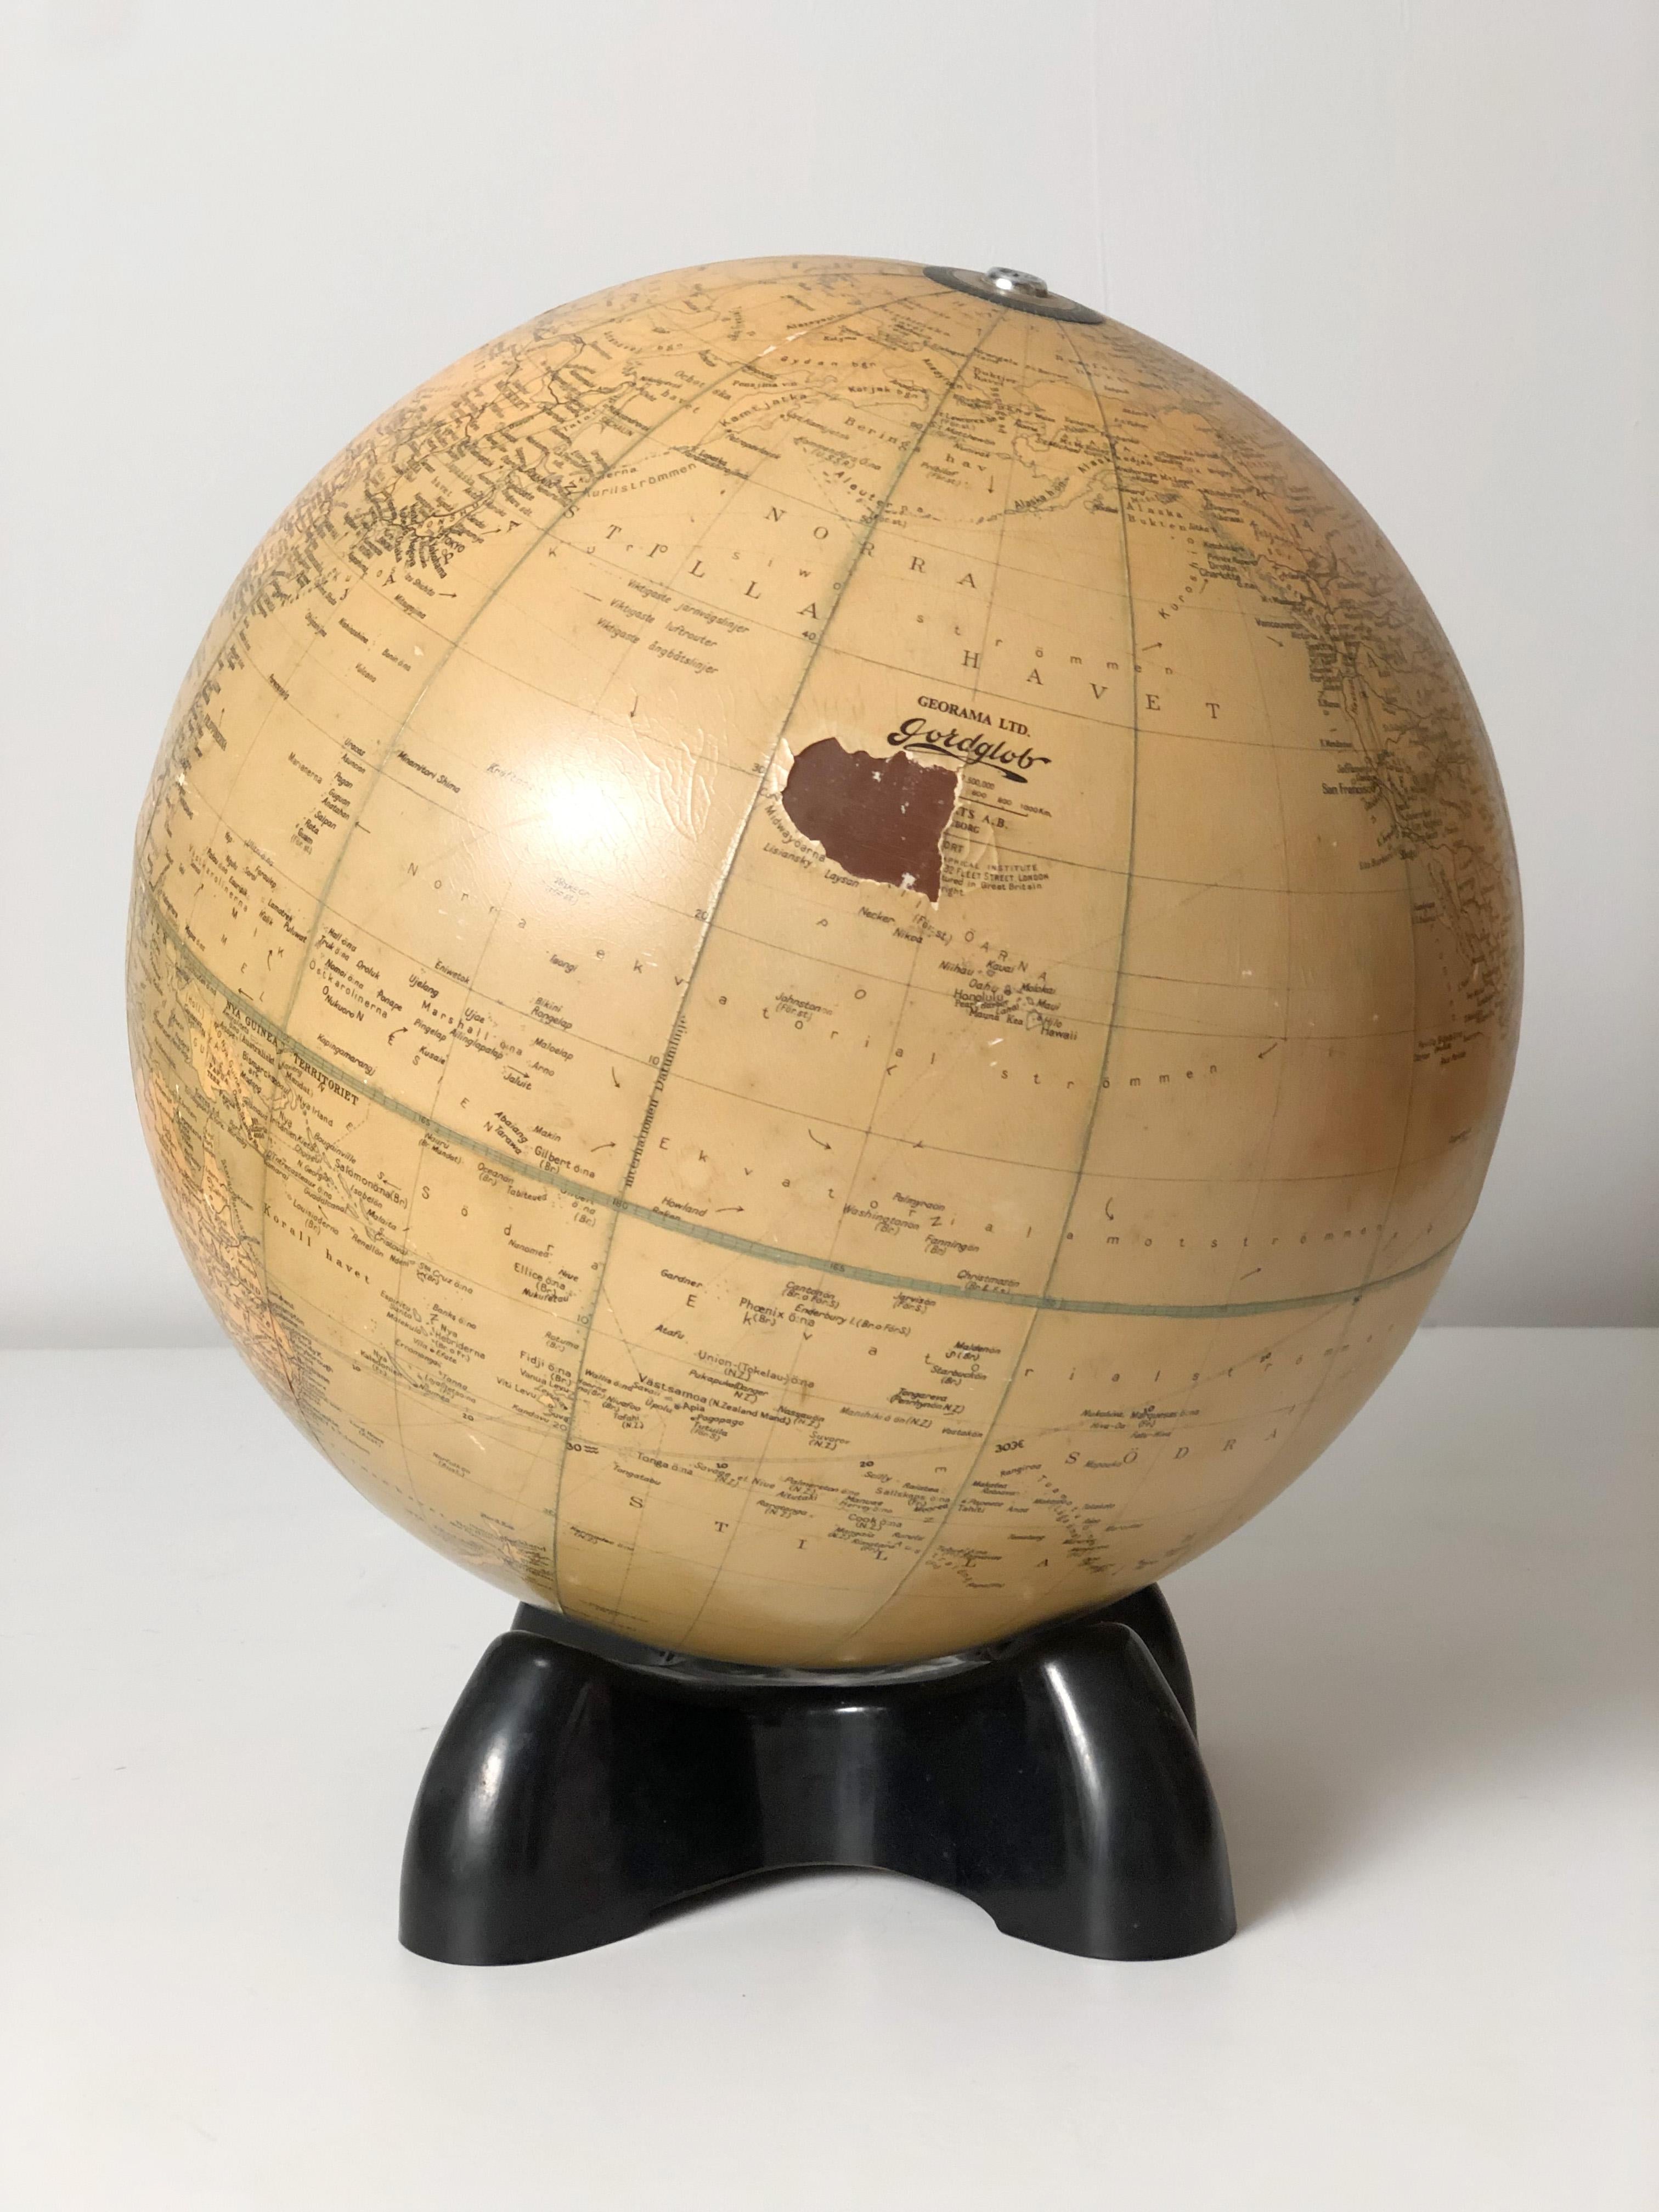 Bakelite 1930’s Illuminated Art Deco Terrestrial Globe By Georama Ltd. London